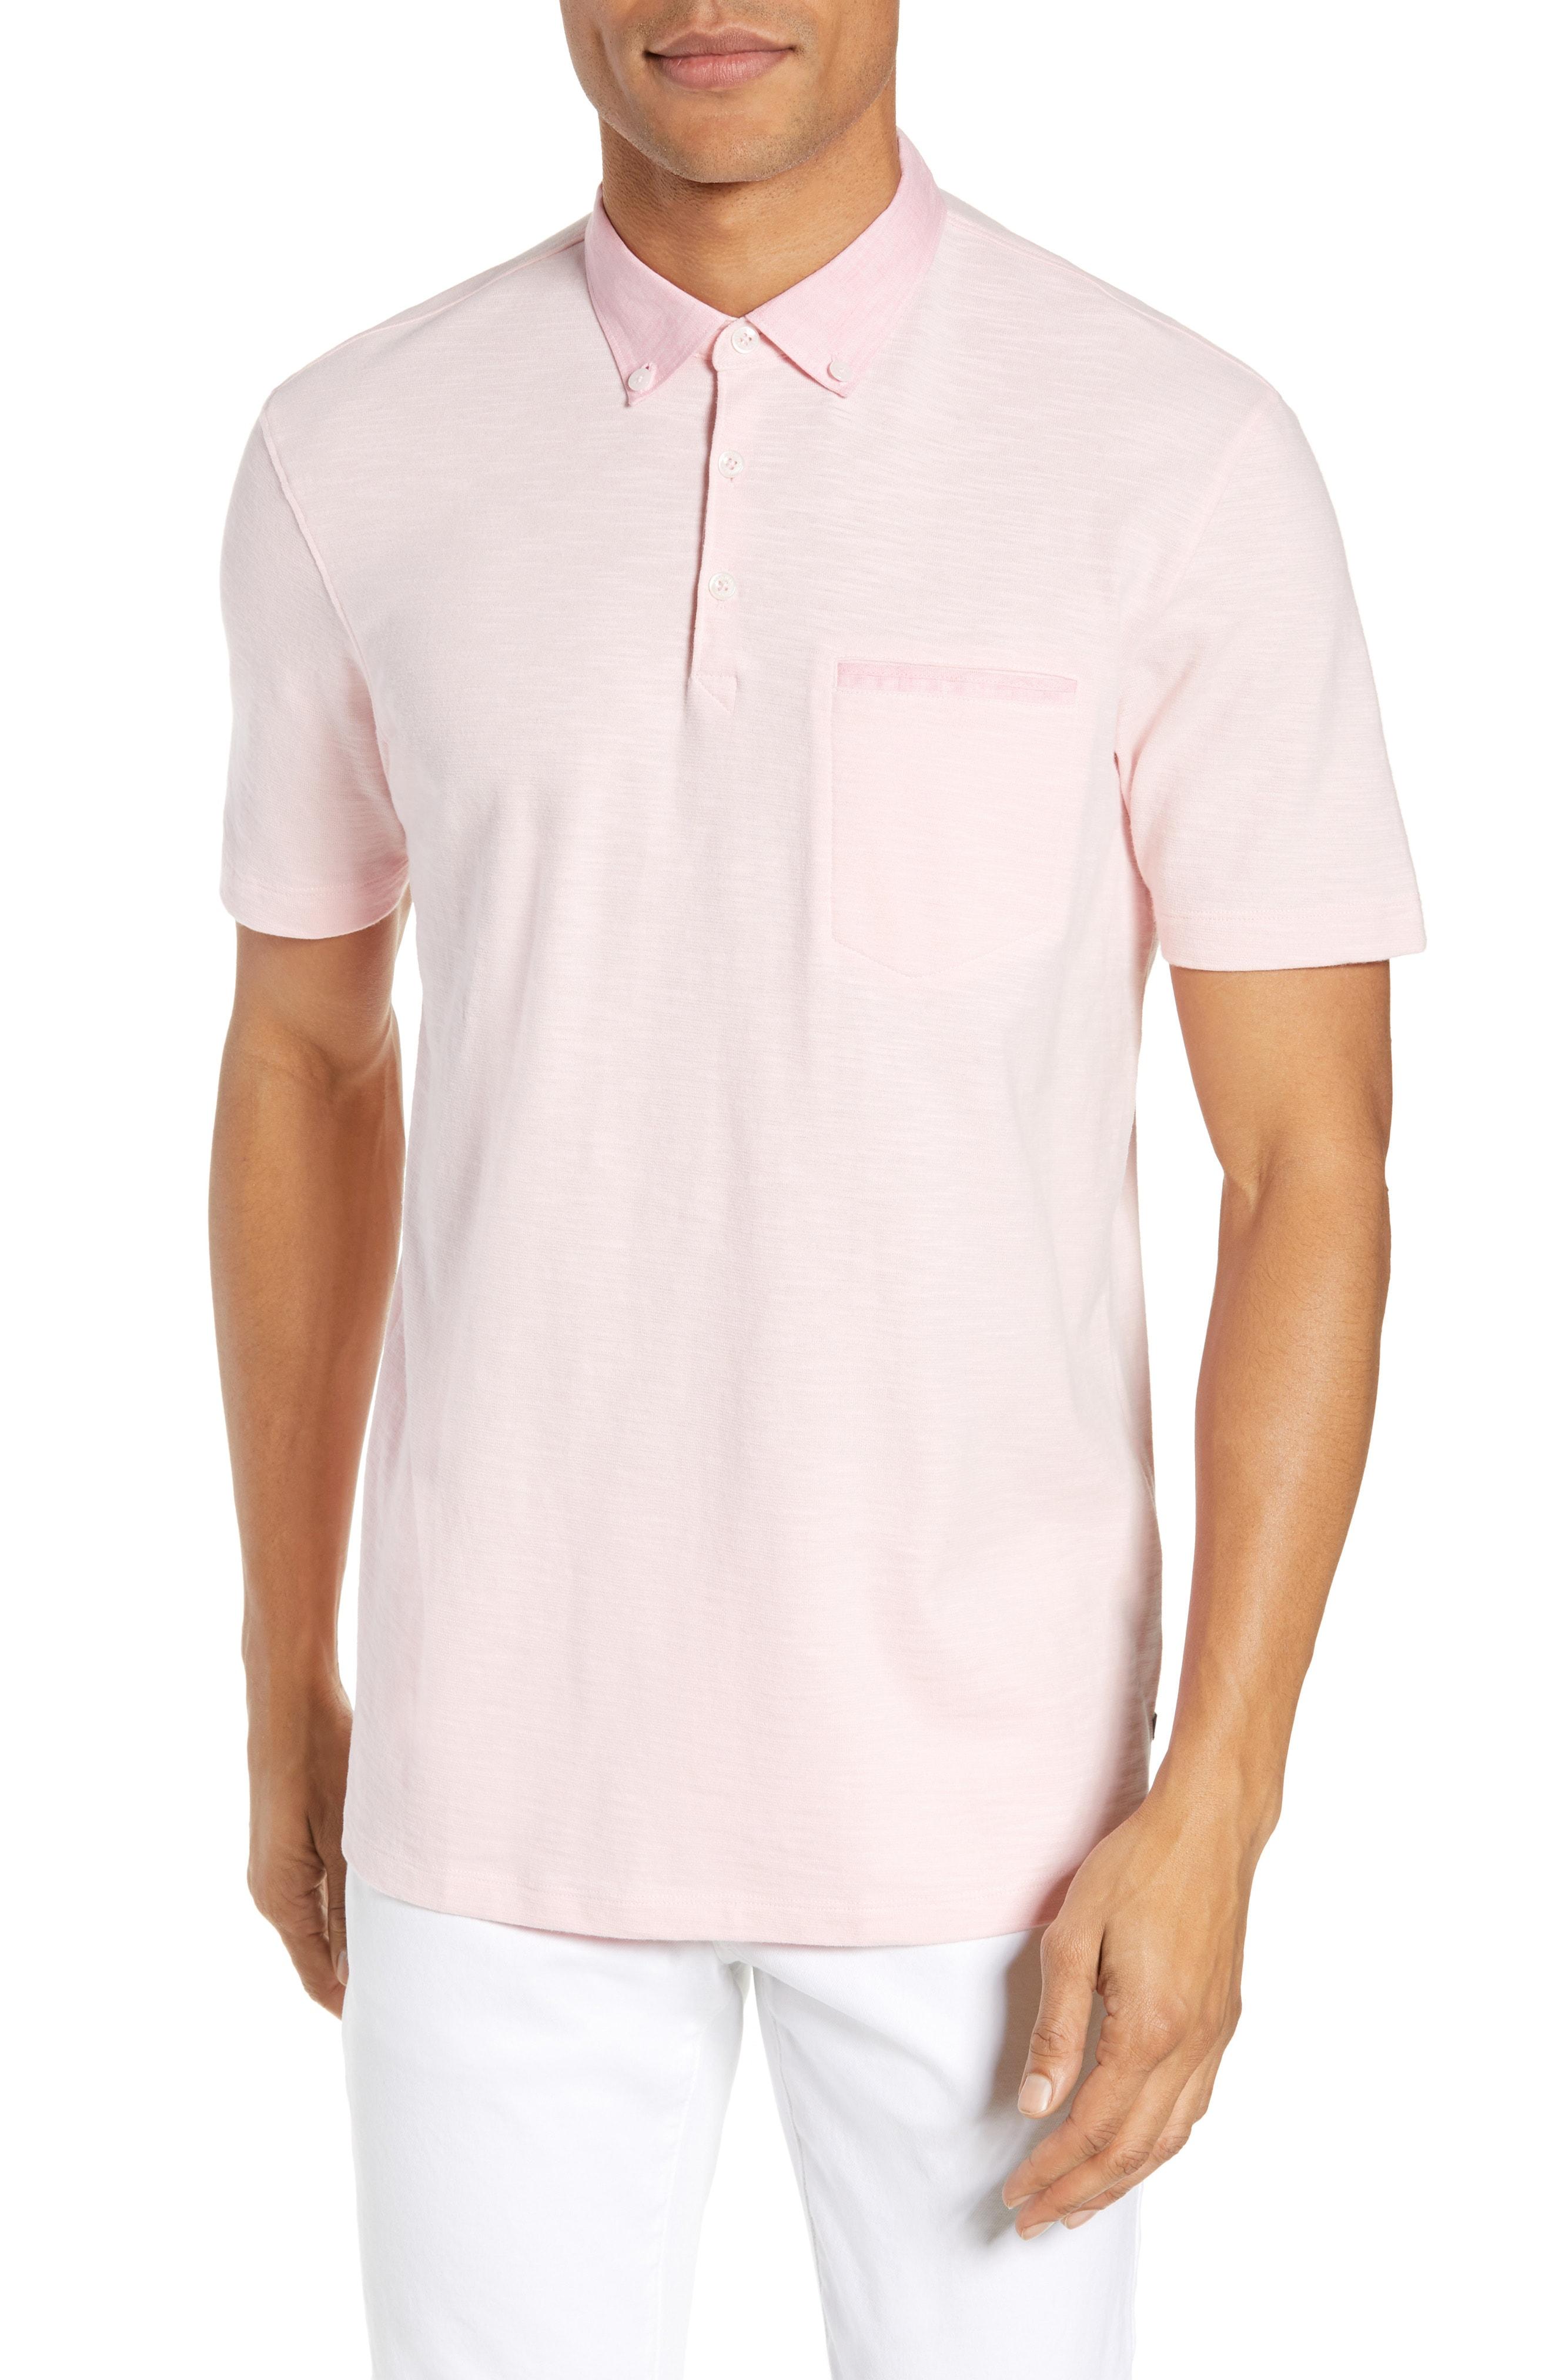 Lyst - Good Man Brand Slub Jersey Cotton Polo Shirt in Pink for Men